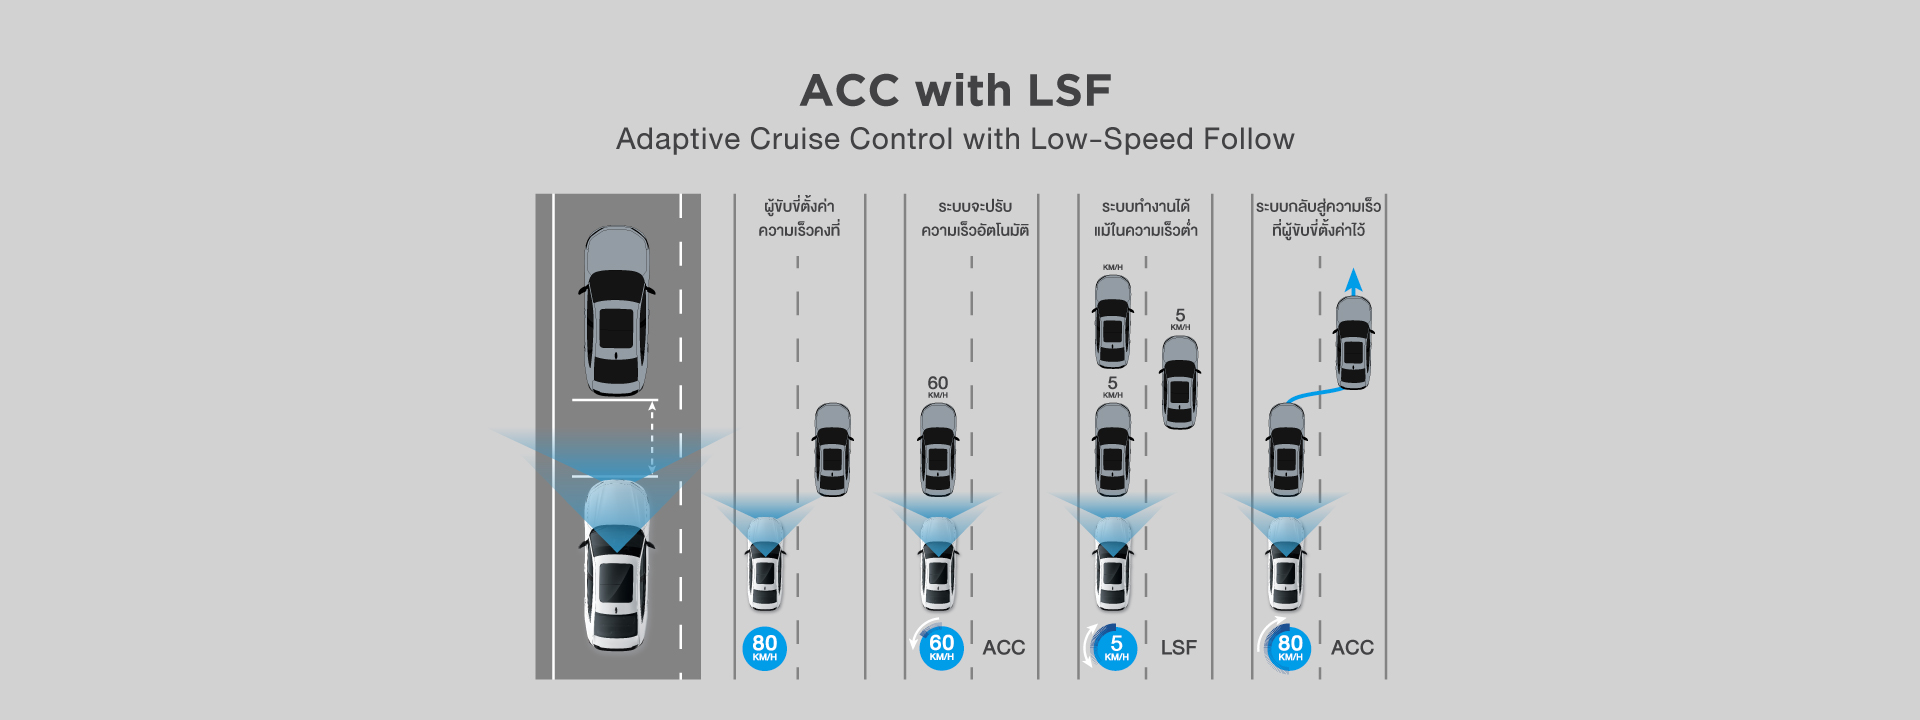 Adaptive Cruise Control with Low-Speed Follow (ACC with LSF) ระบบควบคุมความเร็วอัตโนมัติแบบแปรผันพร้อม ระบบปรับความเร็วตามรถยนต์คันหน้าที่ความเร็วต่ำ